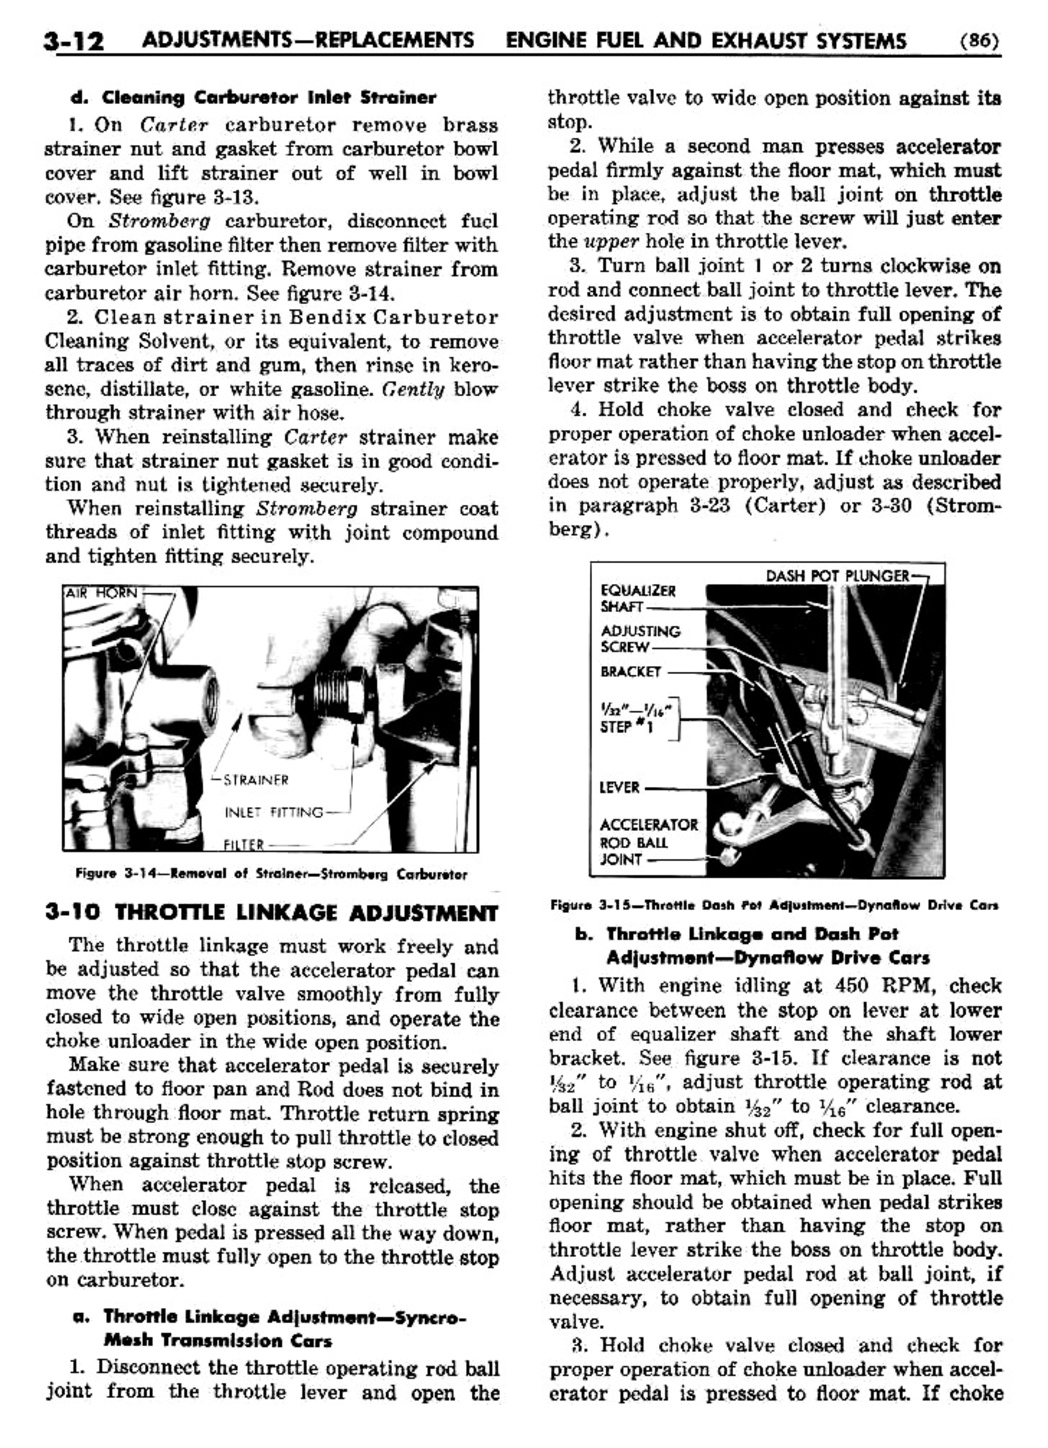 n_04 1948 Buick Shop Manual - Engine Fuel & Exhaust-012-012.jpg